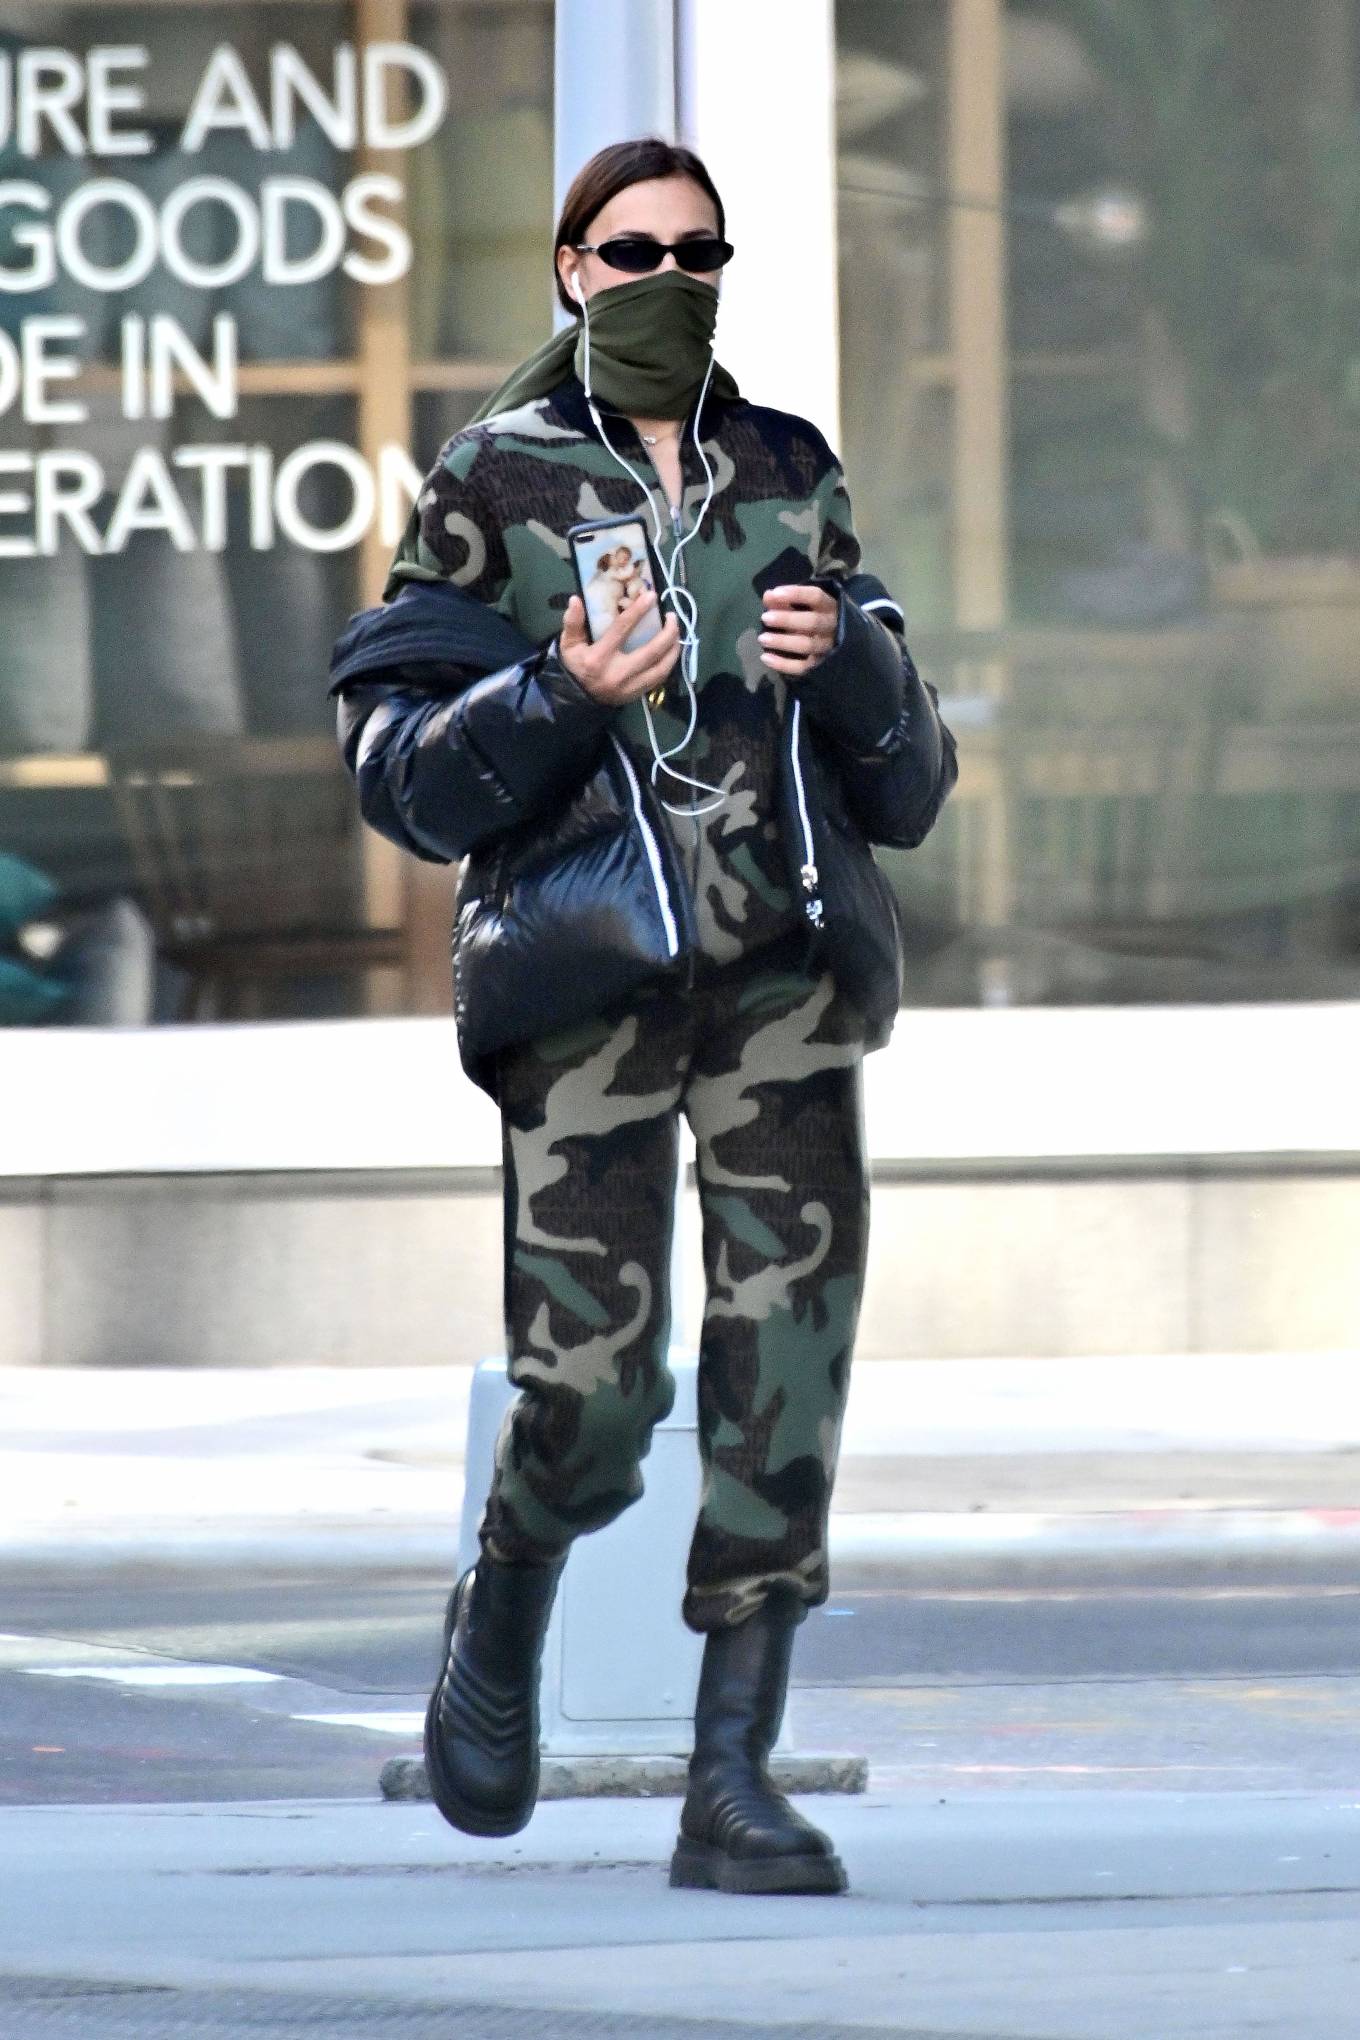 Irina Shayk - In Military Look during lockdown in New York City